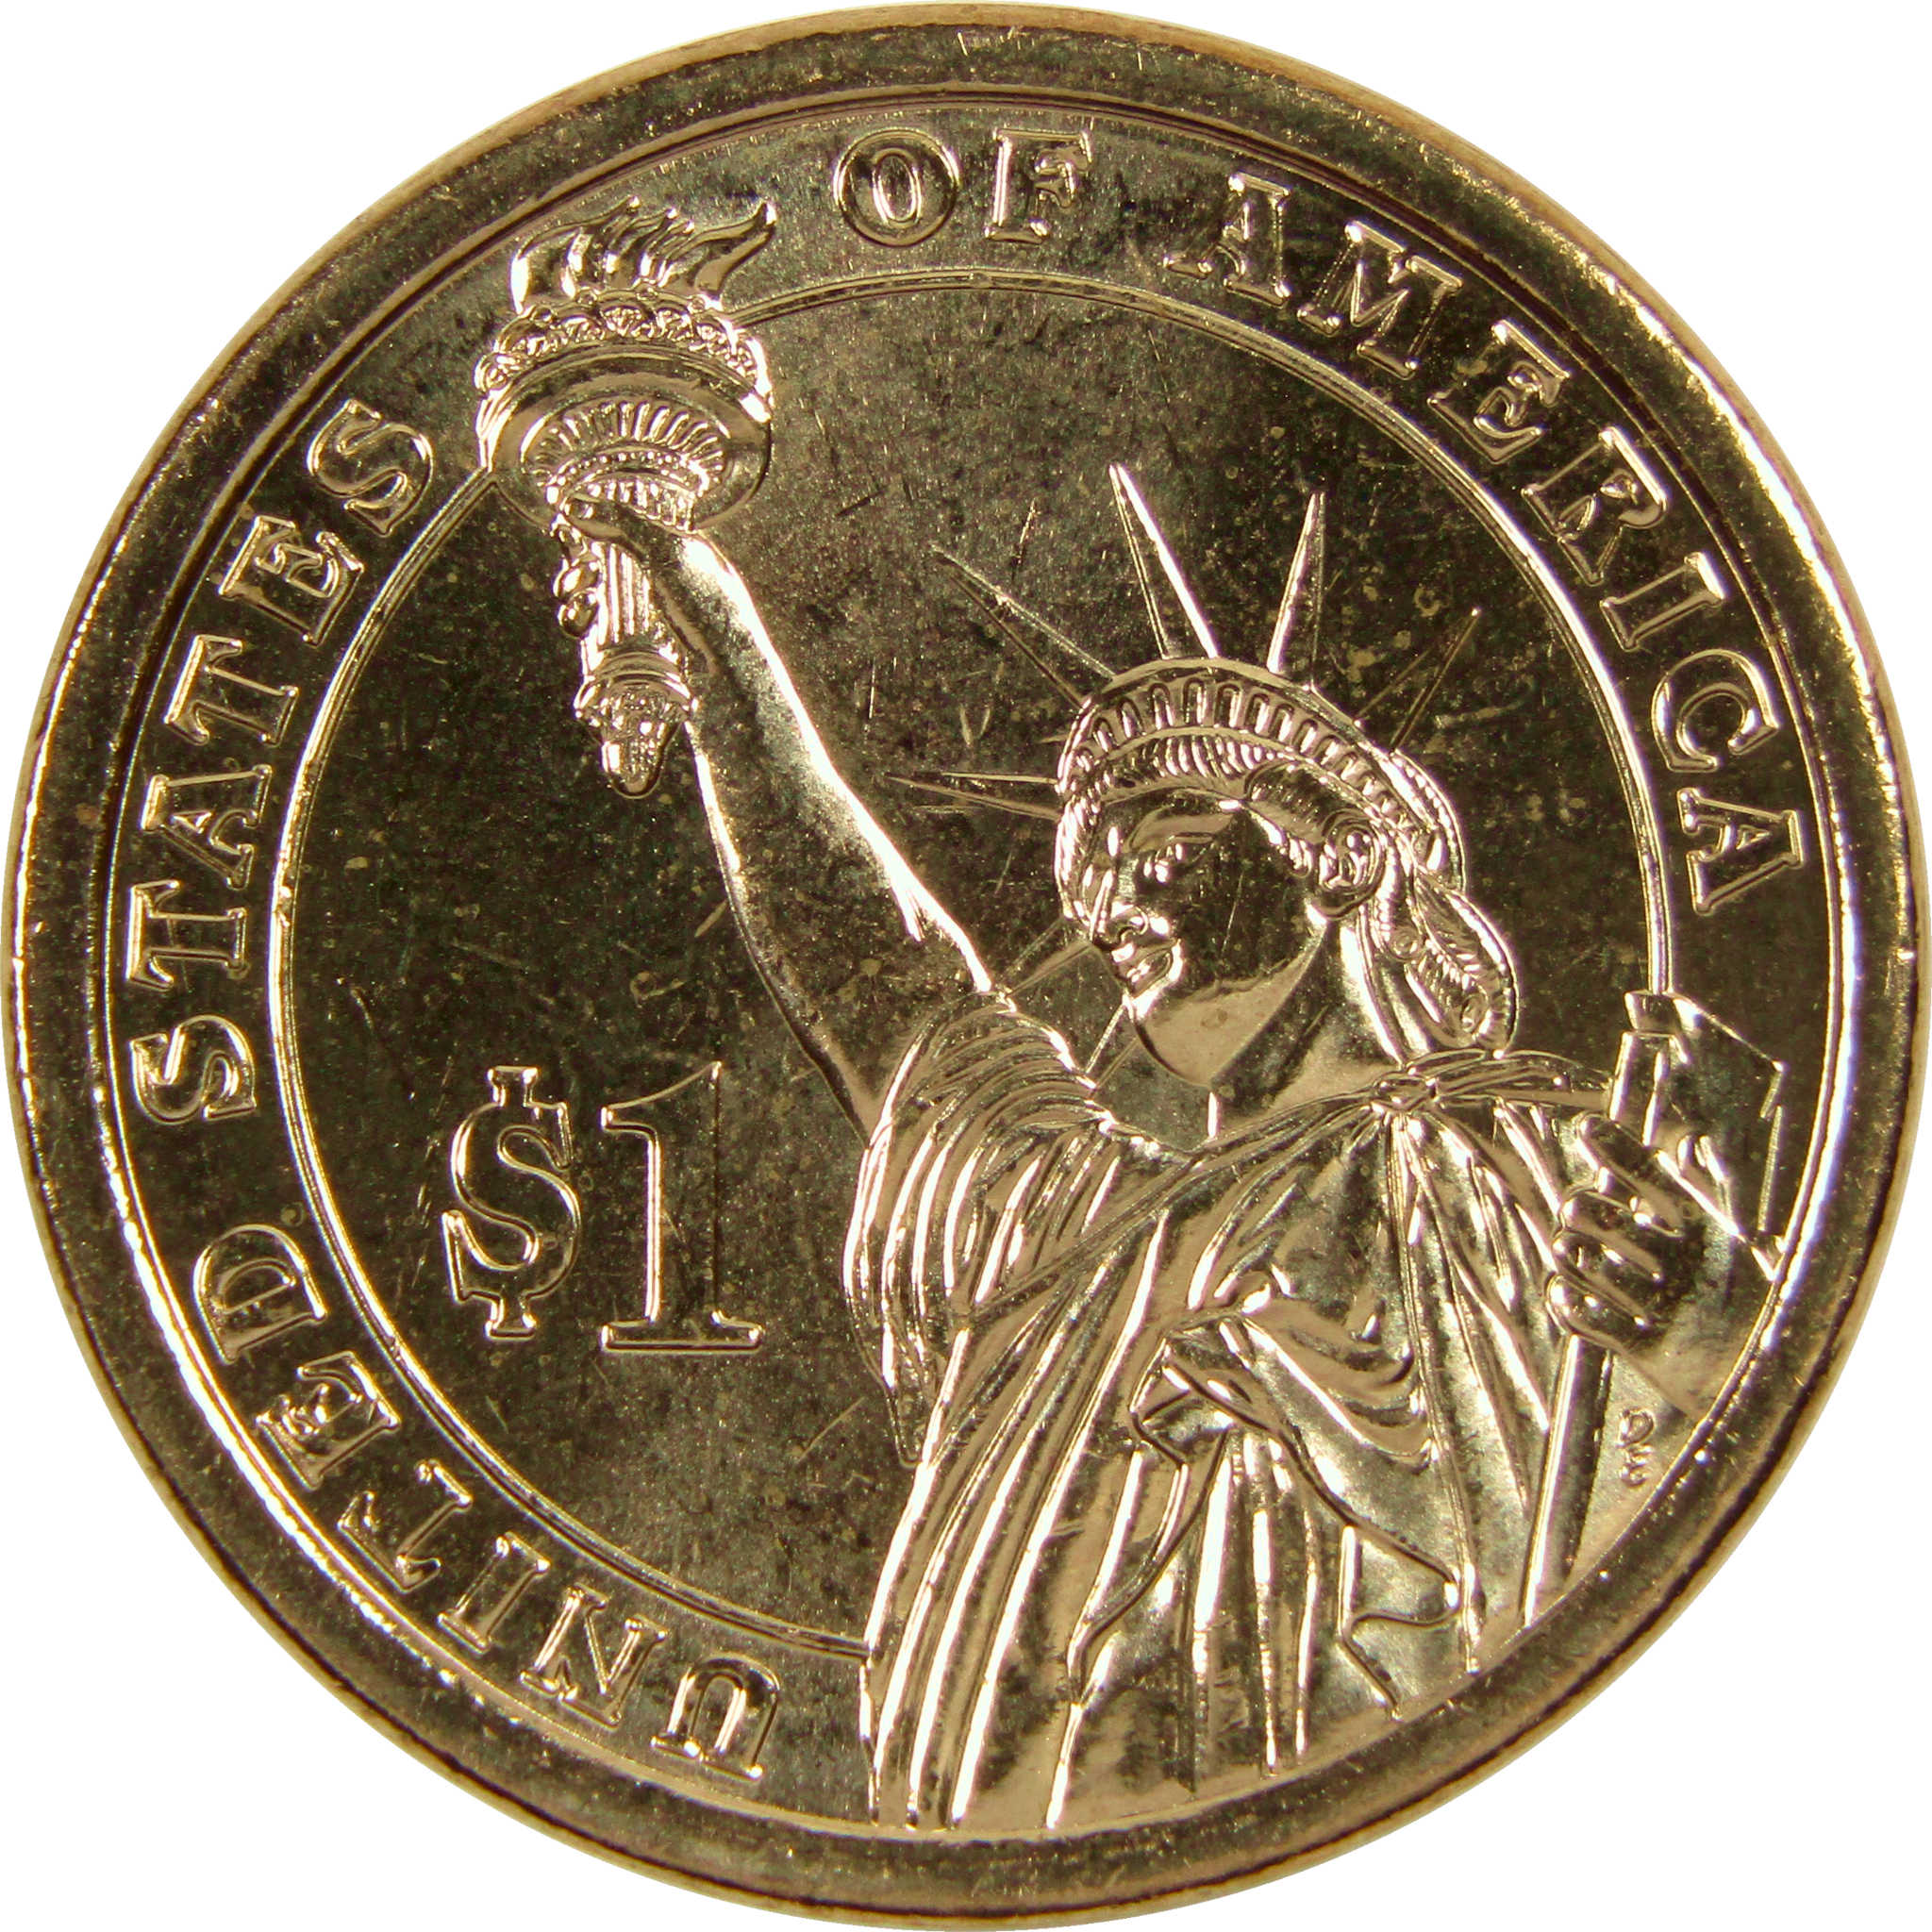 2007 D George Washington Presidential Dollar BU Uncirculated $1 Coin